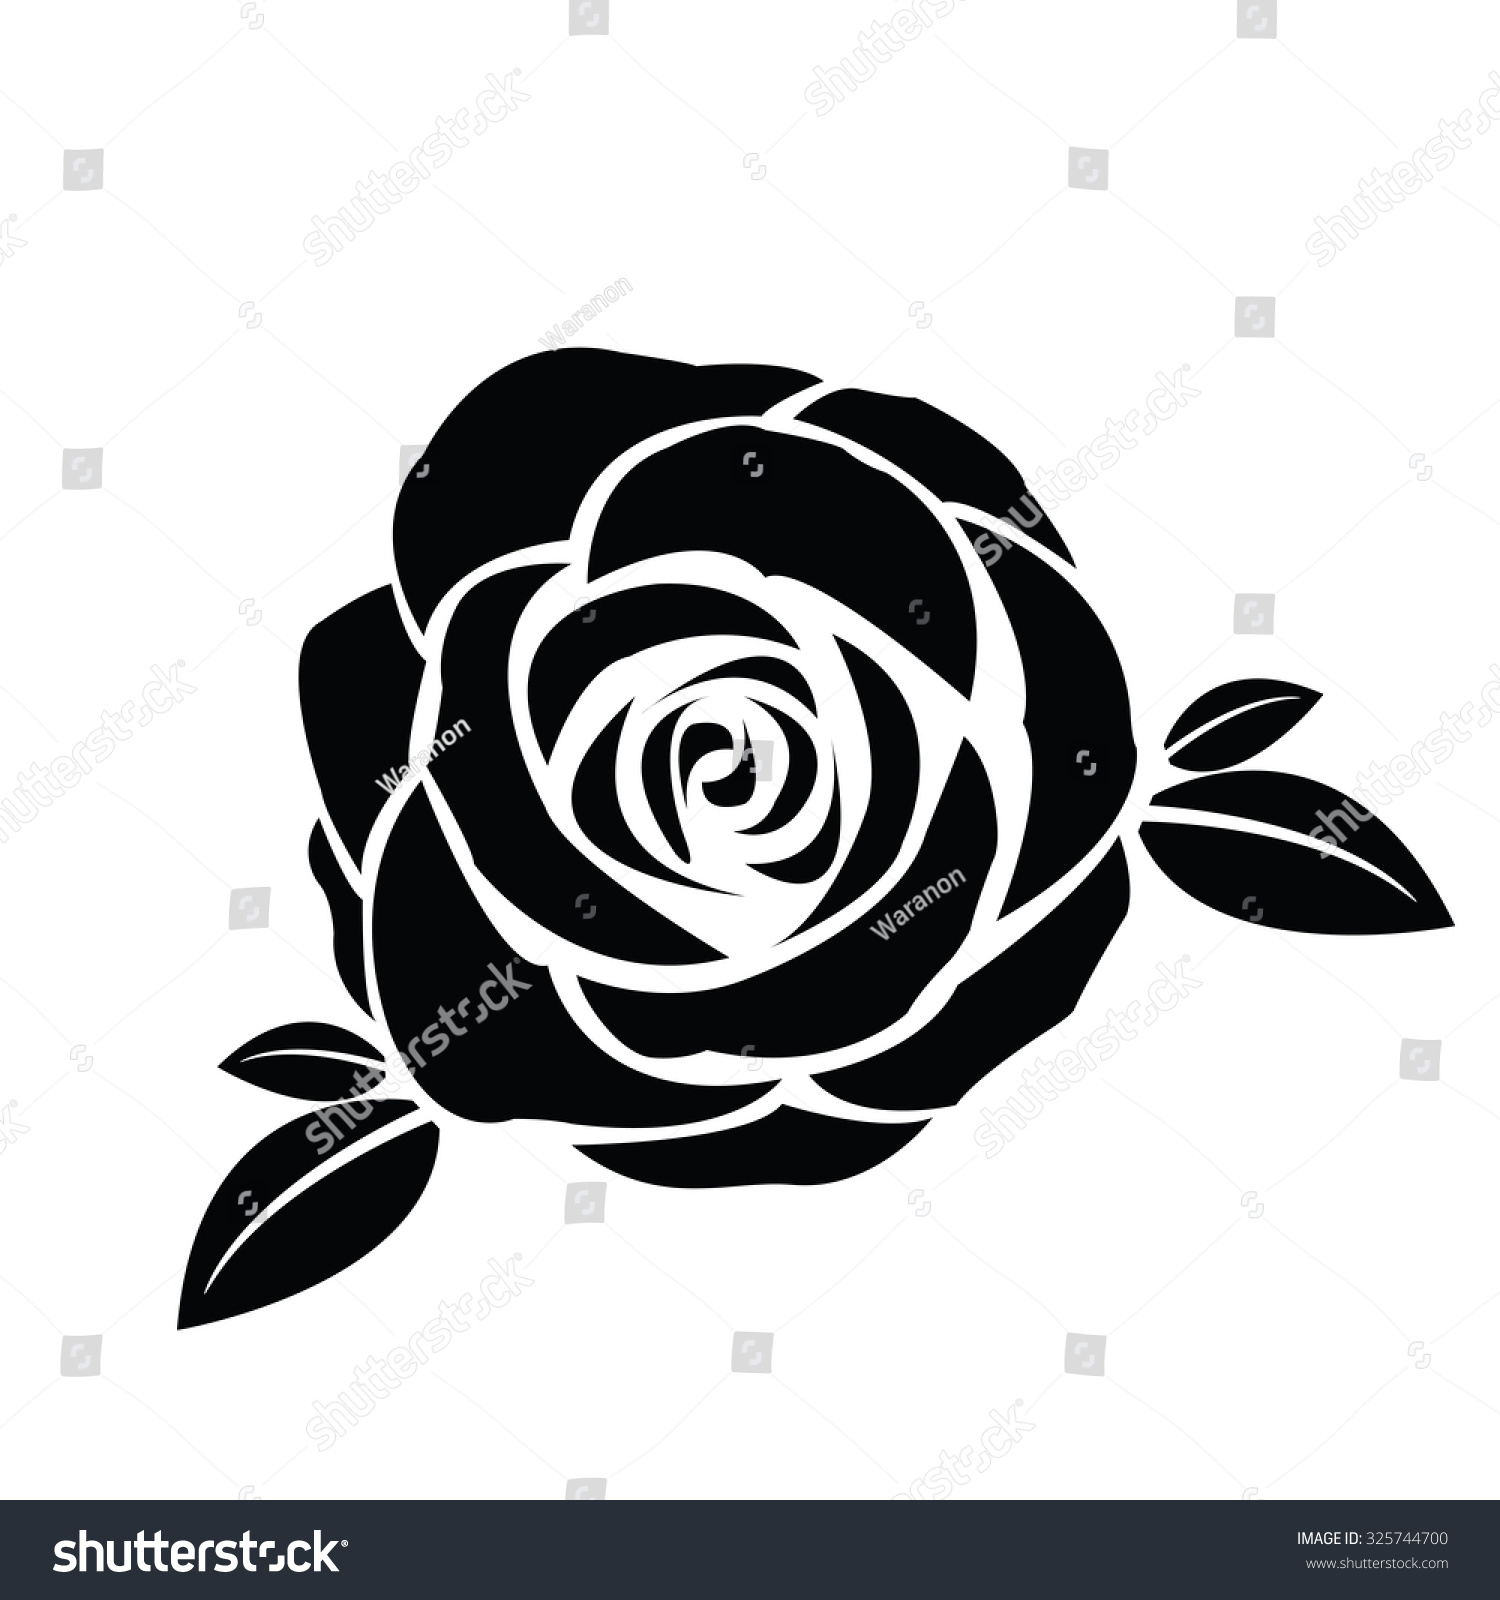 rose clip art vector - photo #37